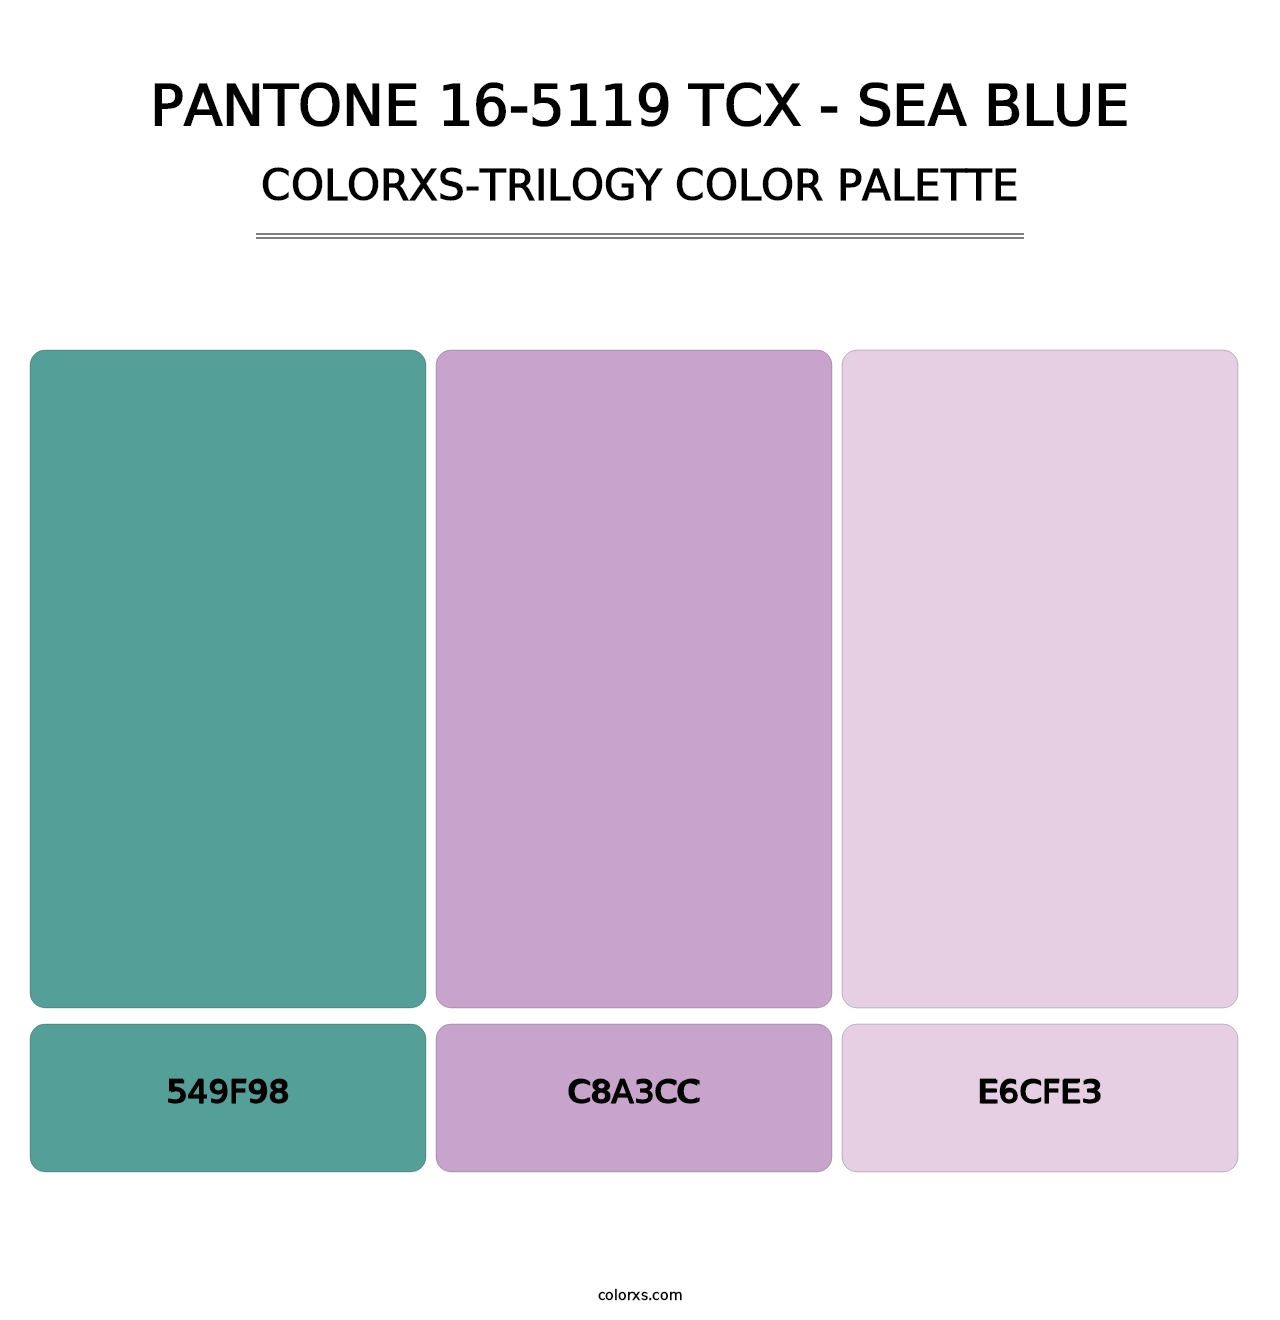 PANTONE 16-5119 TCX - Sea Blue - Colorxs Trilogy Palette